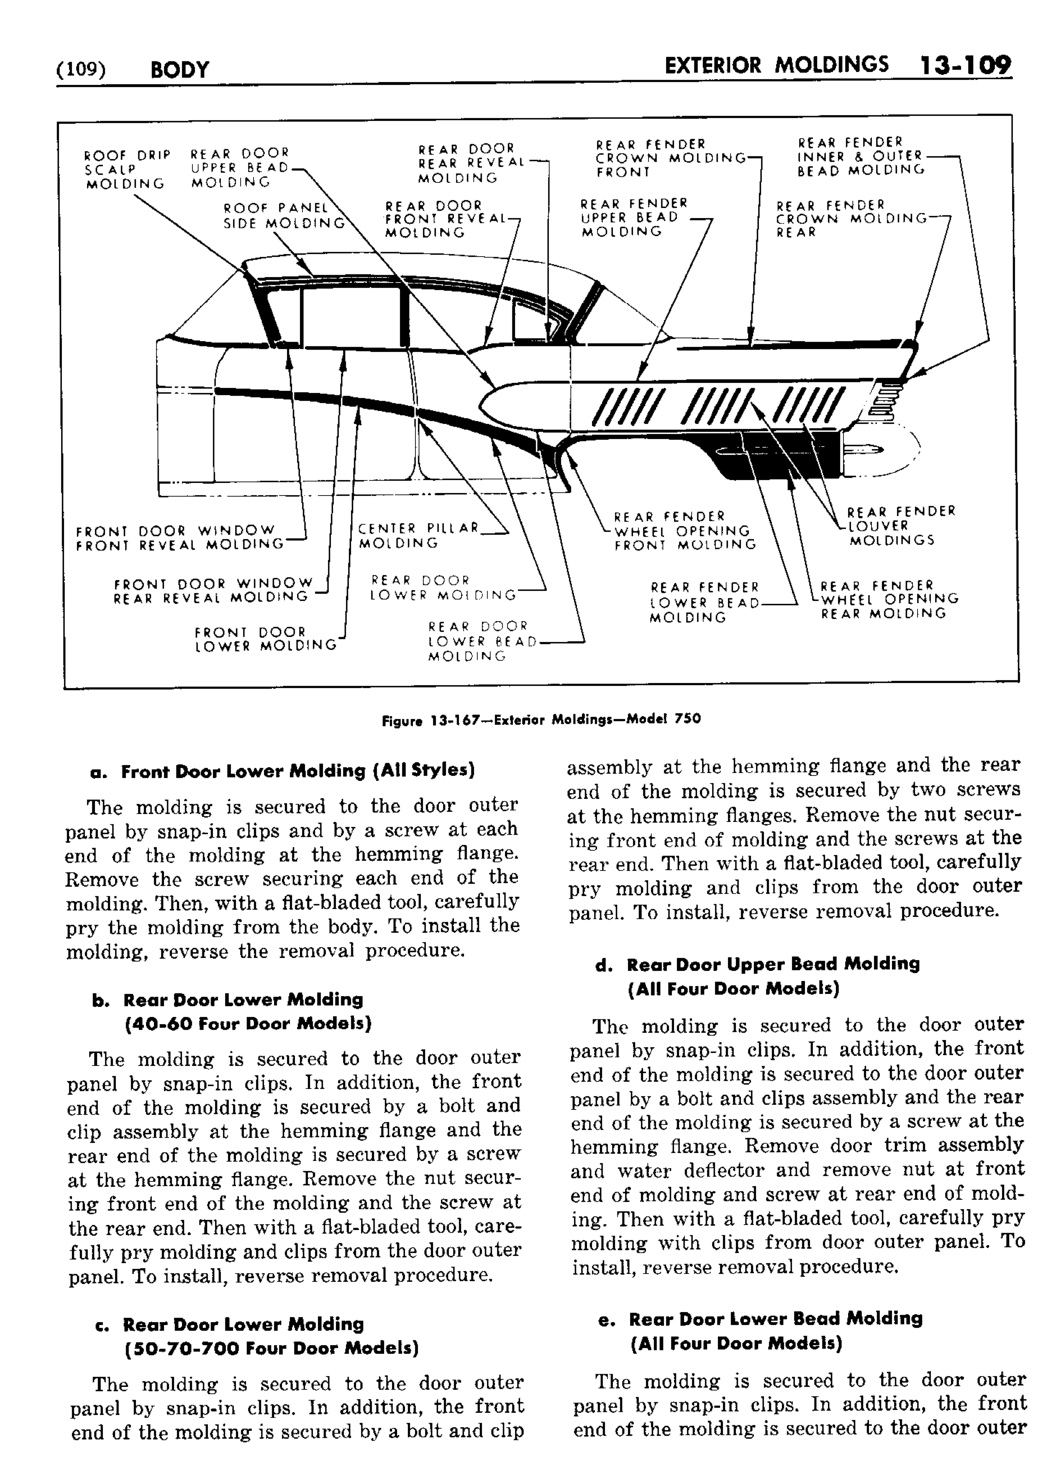 n_1958 Buick Body Service Manual-110-110.jpg